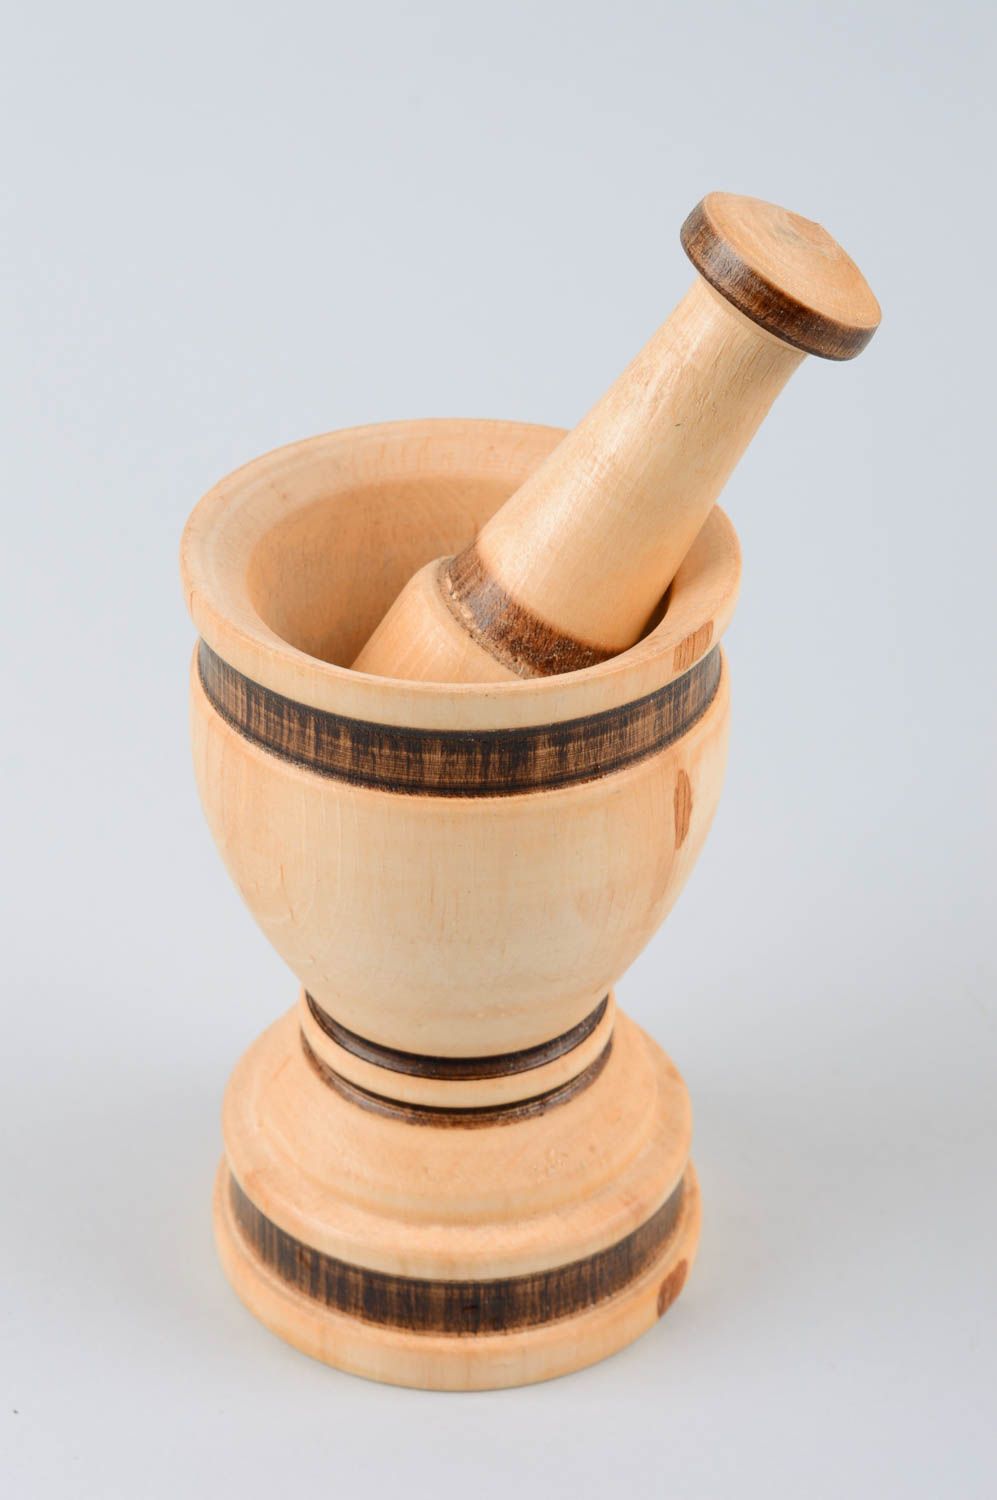 Handmade wooden mortar and pestle wooden hand spice grinder kitchen accessories photo 3